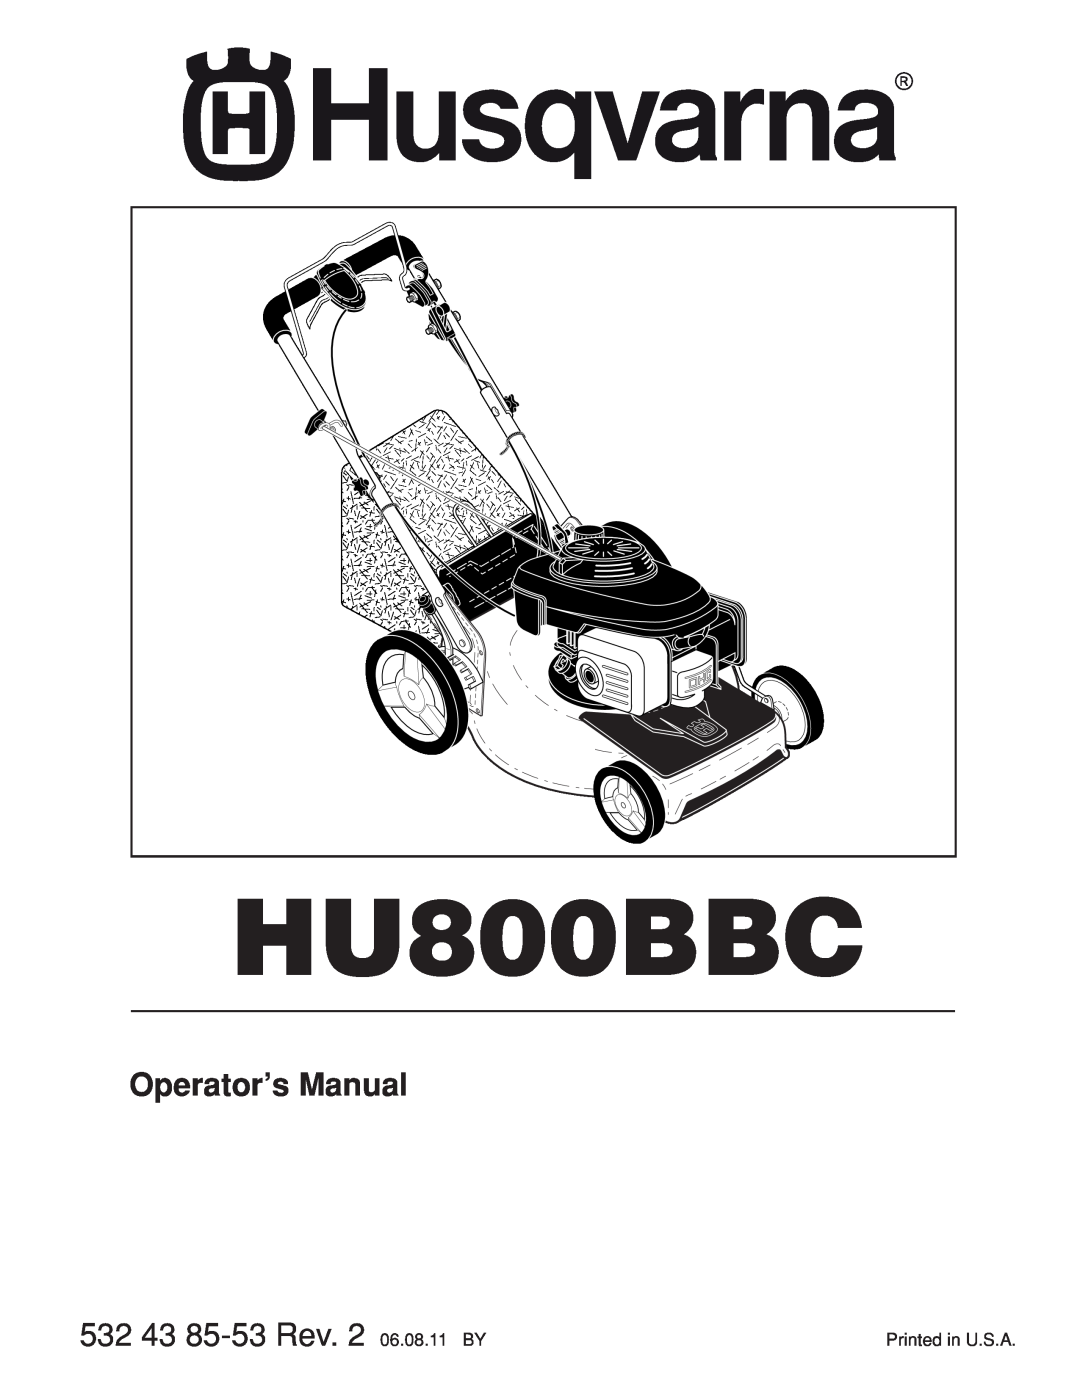 Husqvarna HU800BBC manual Operator’s Manual, 532 43 85-53 Rev. 2 06.08.11 BY 